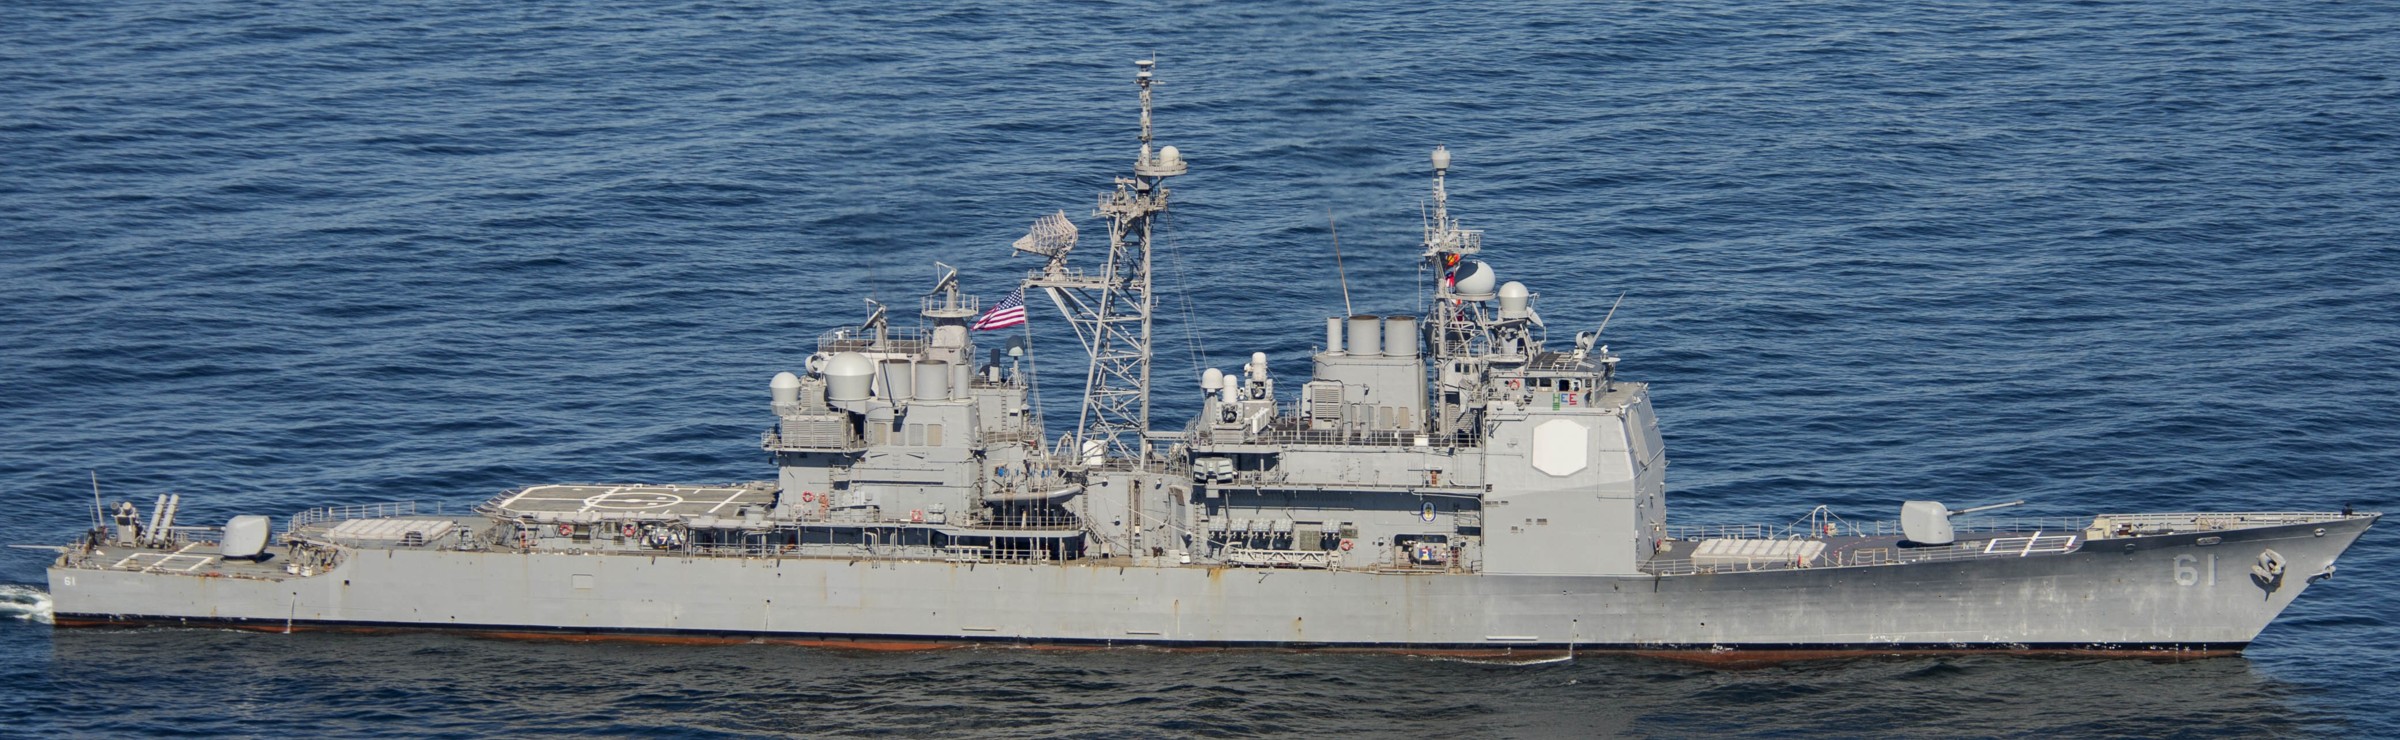 cg-61 uss monterey ticonderoga class guided missile cruiser aegis us navy 75